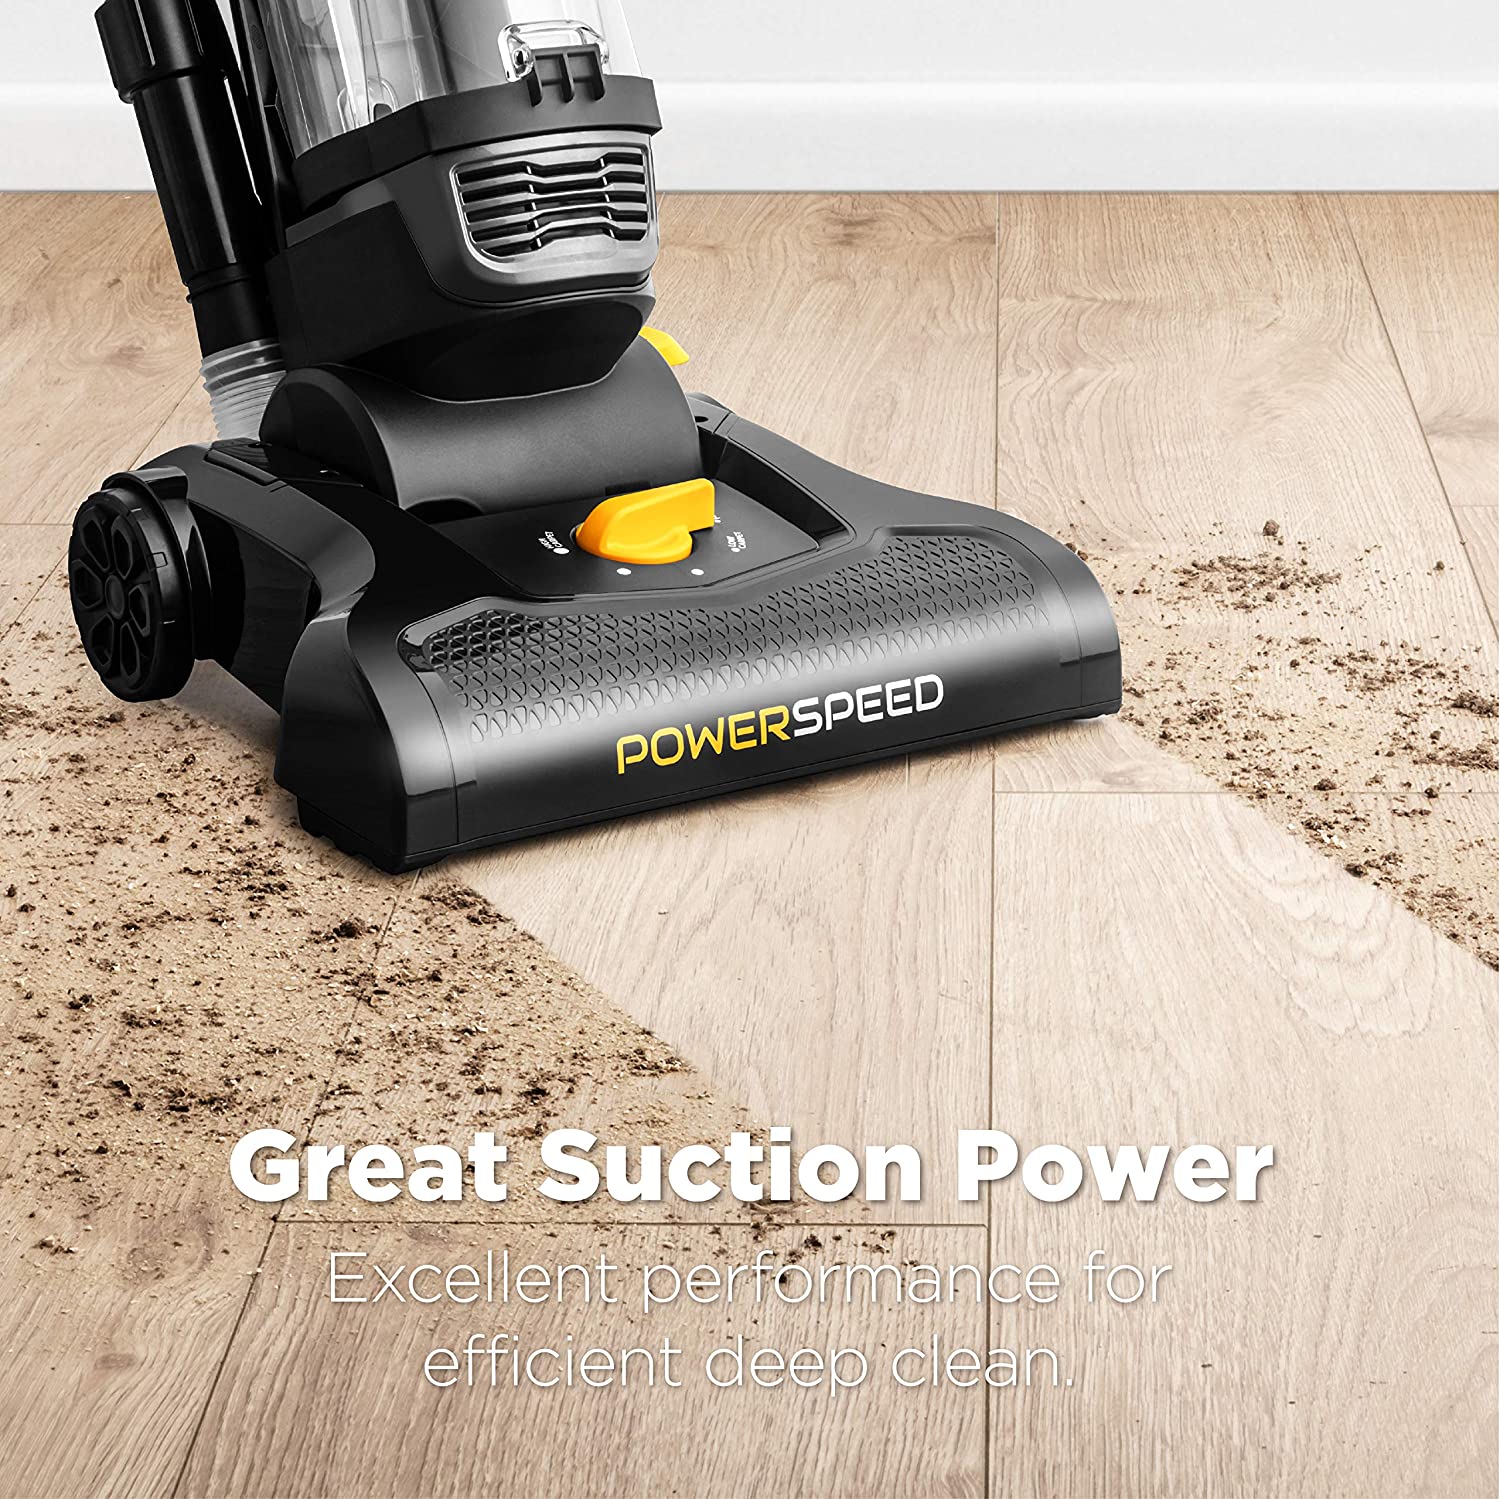 Eureka PowerSpeed Bagless Upright Vacuum Cleaner, Pet Turbo, Black - image 4 of 5